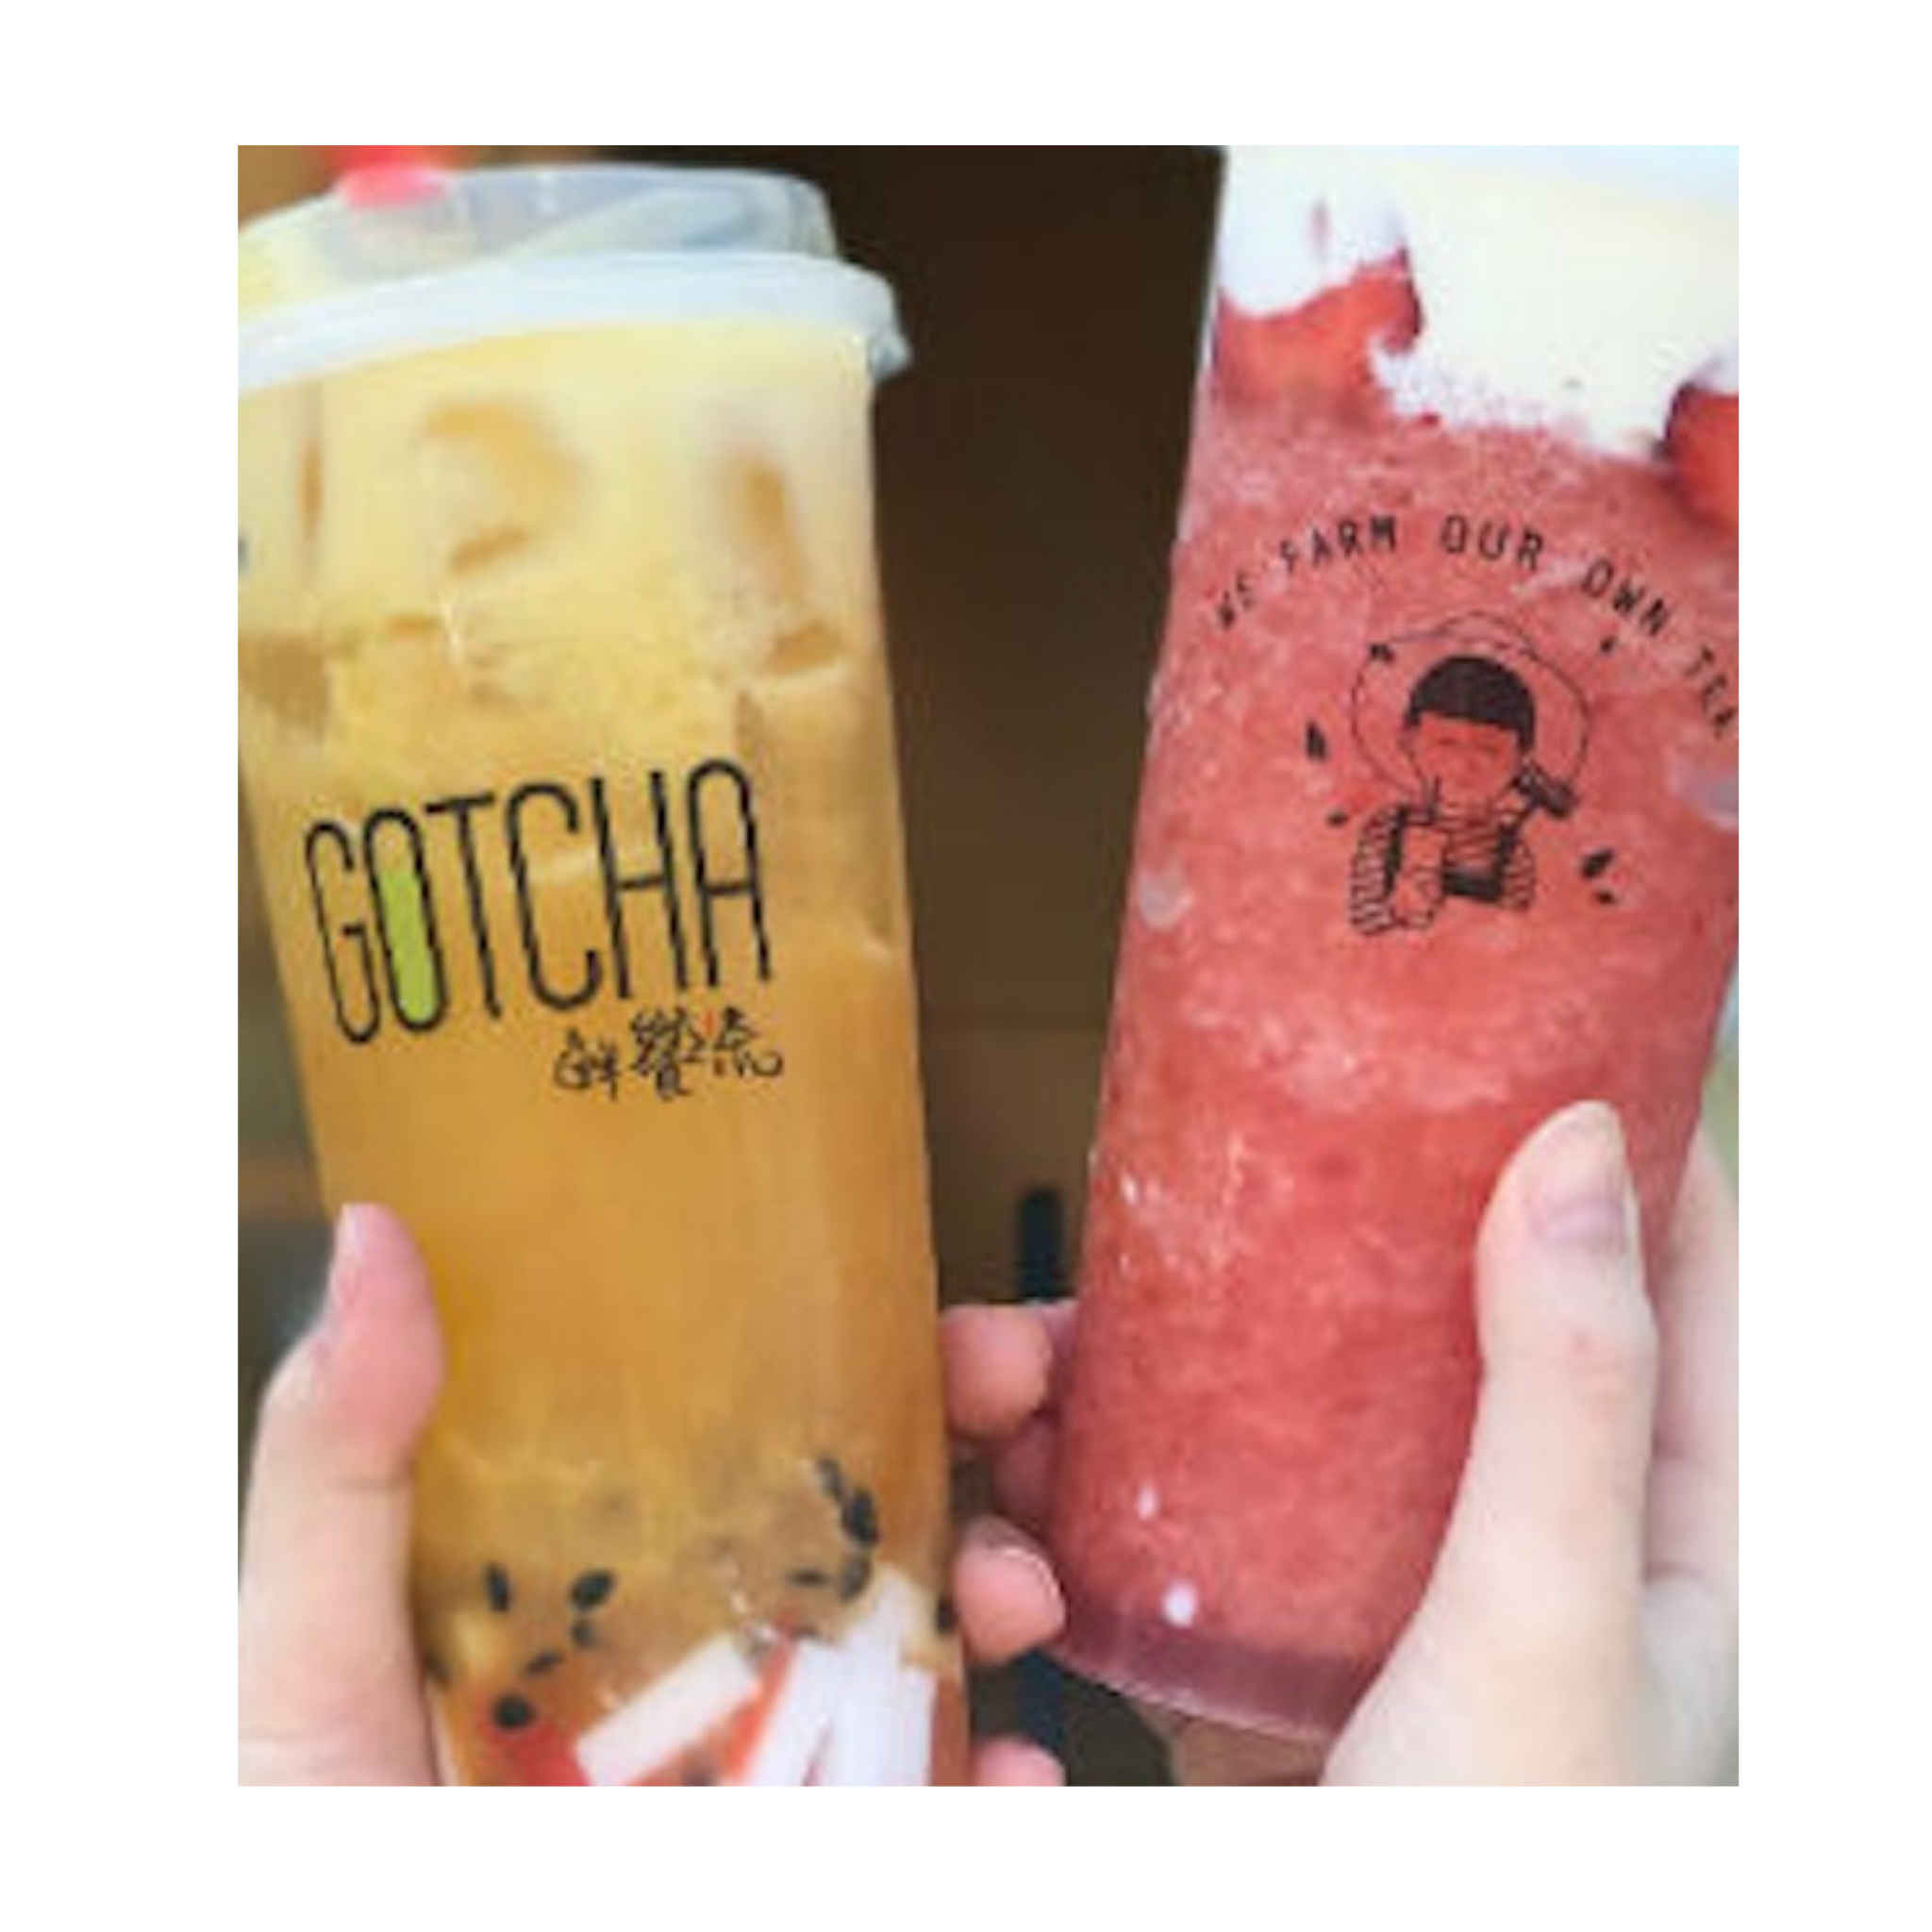 Gotch Bubble tea